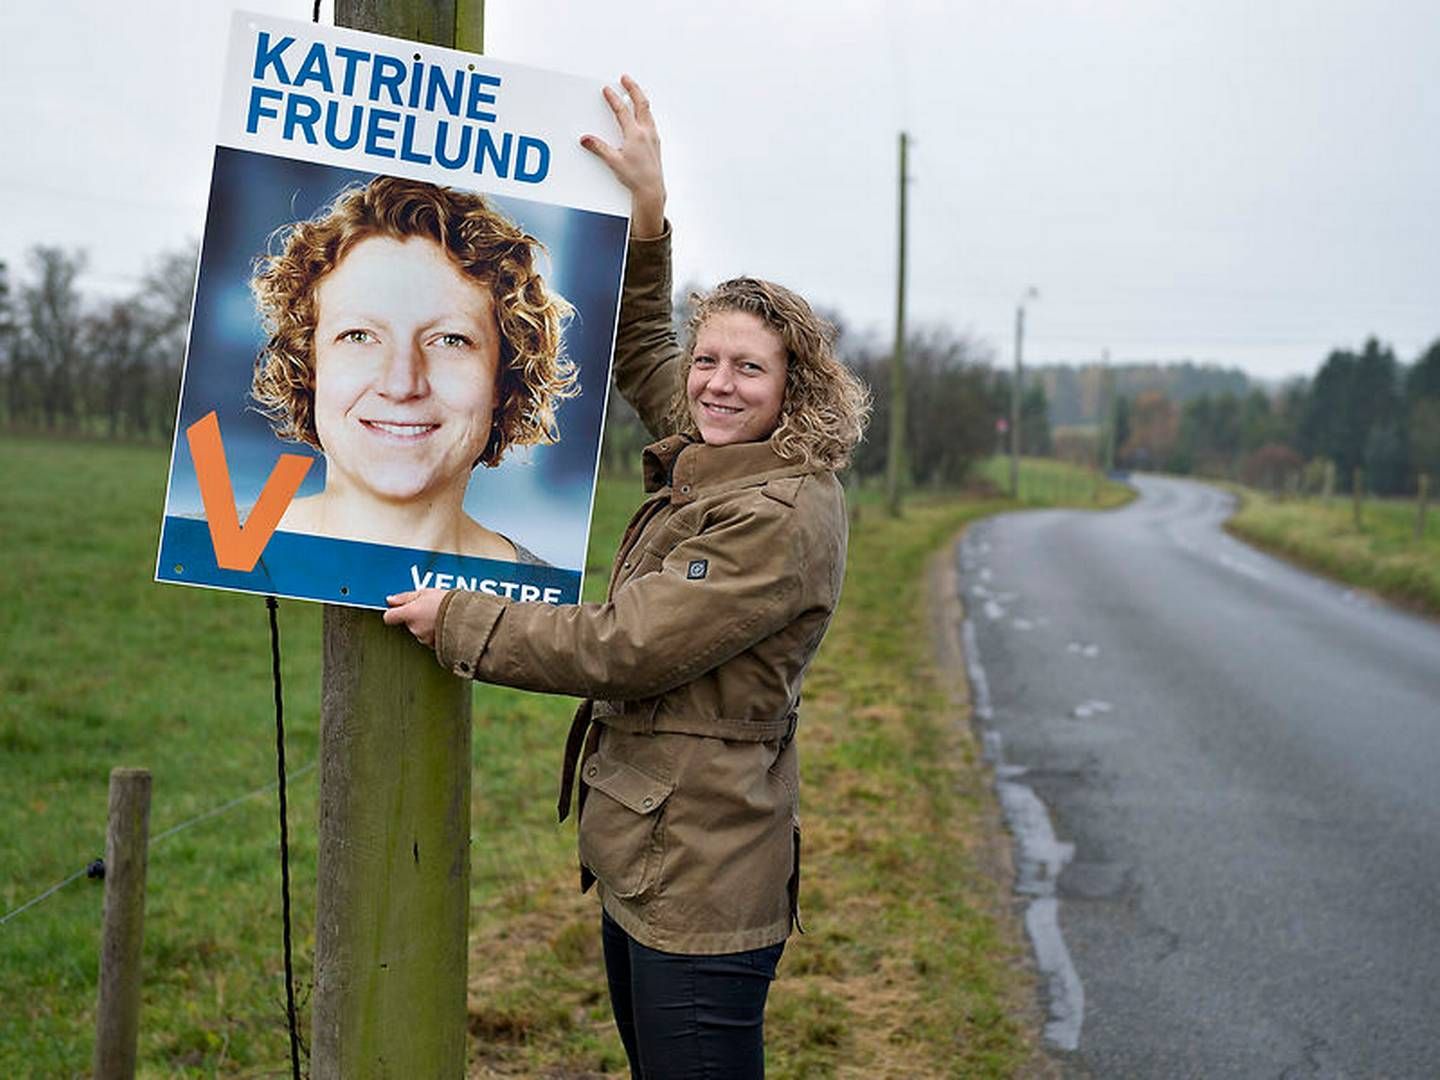 Den tidligere håndboldspiller Katrine Fruelund vil i Europaparlamentet for Venstre. | Foto: Henning Bagger/Ritzau Scanpix